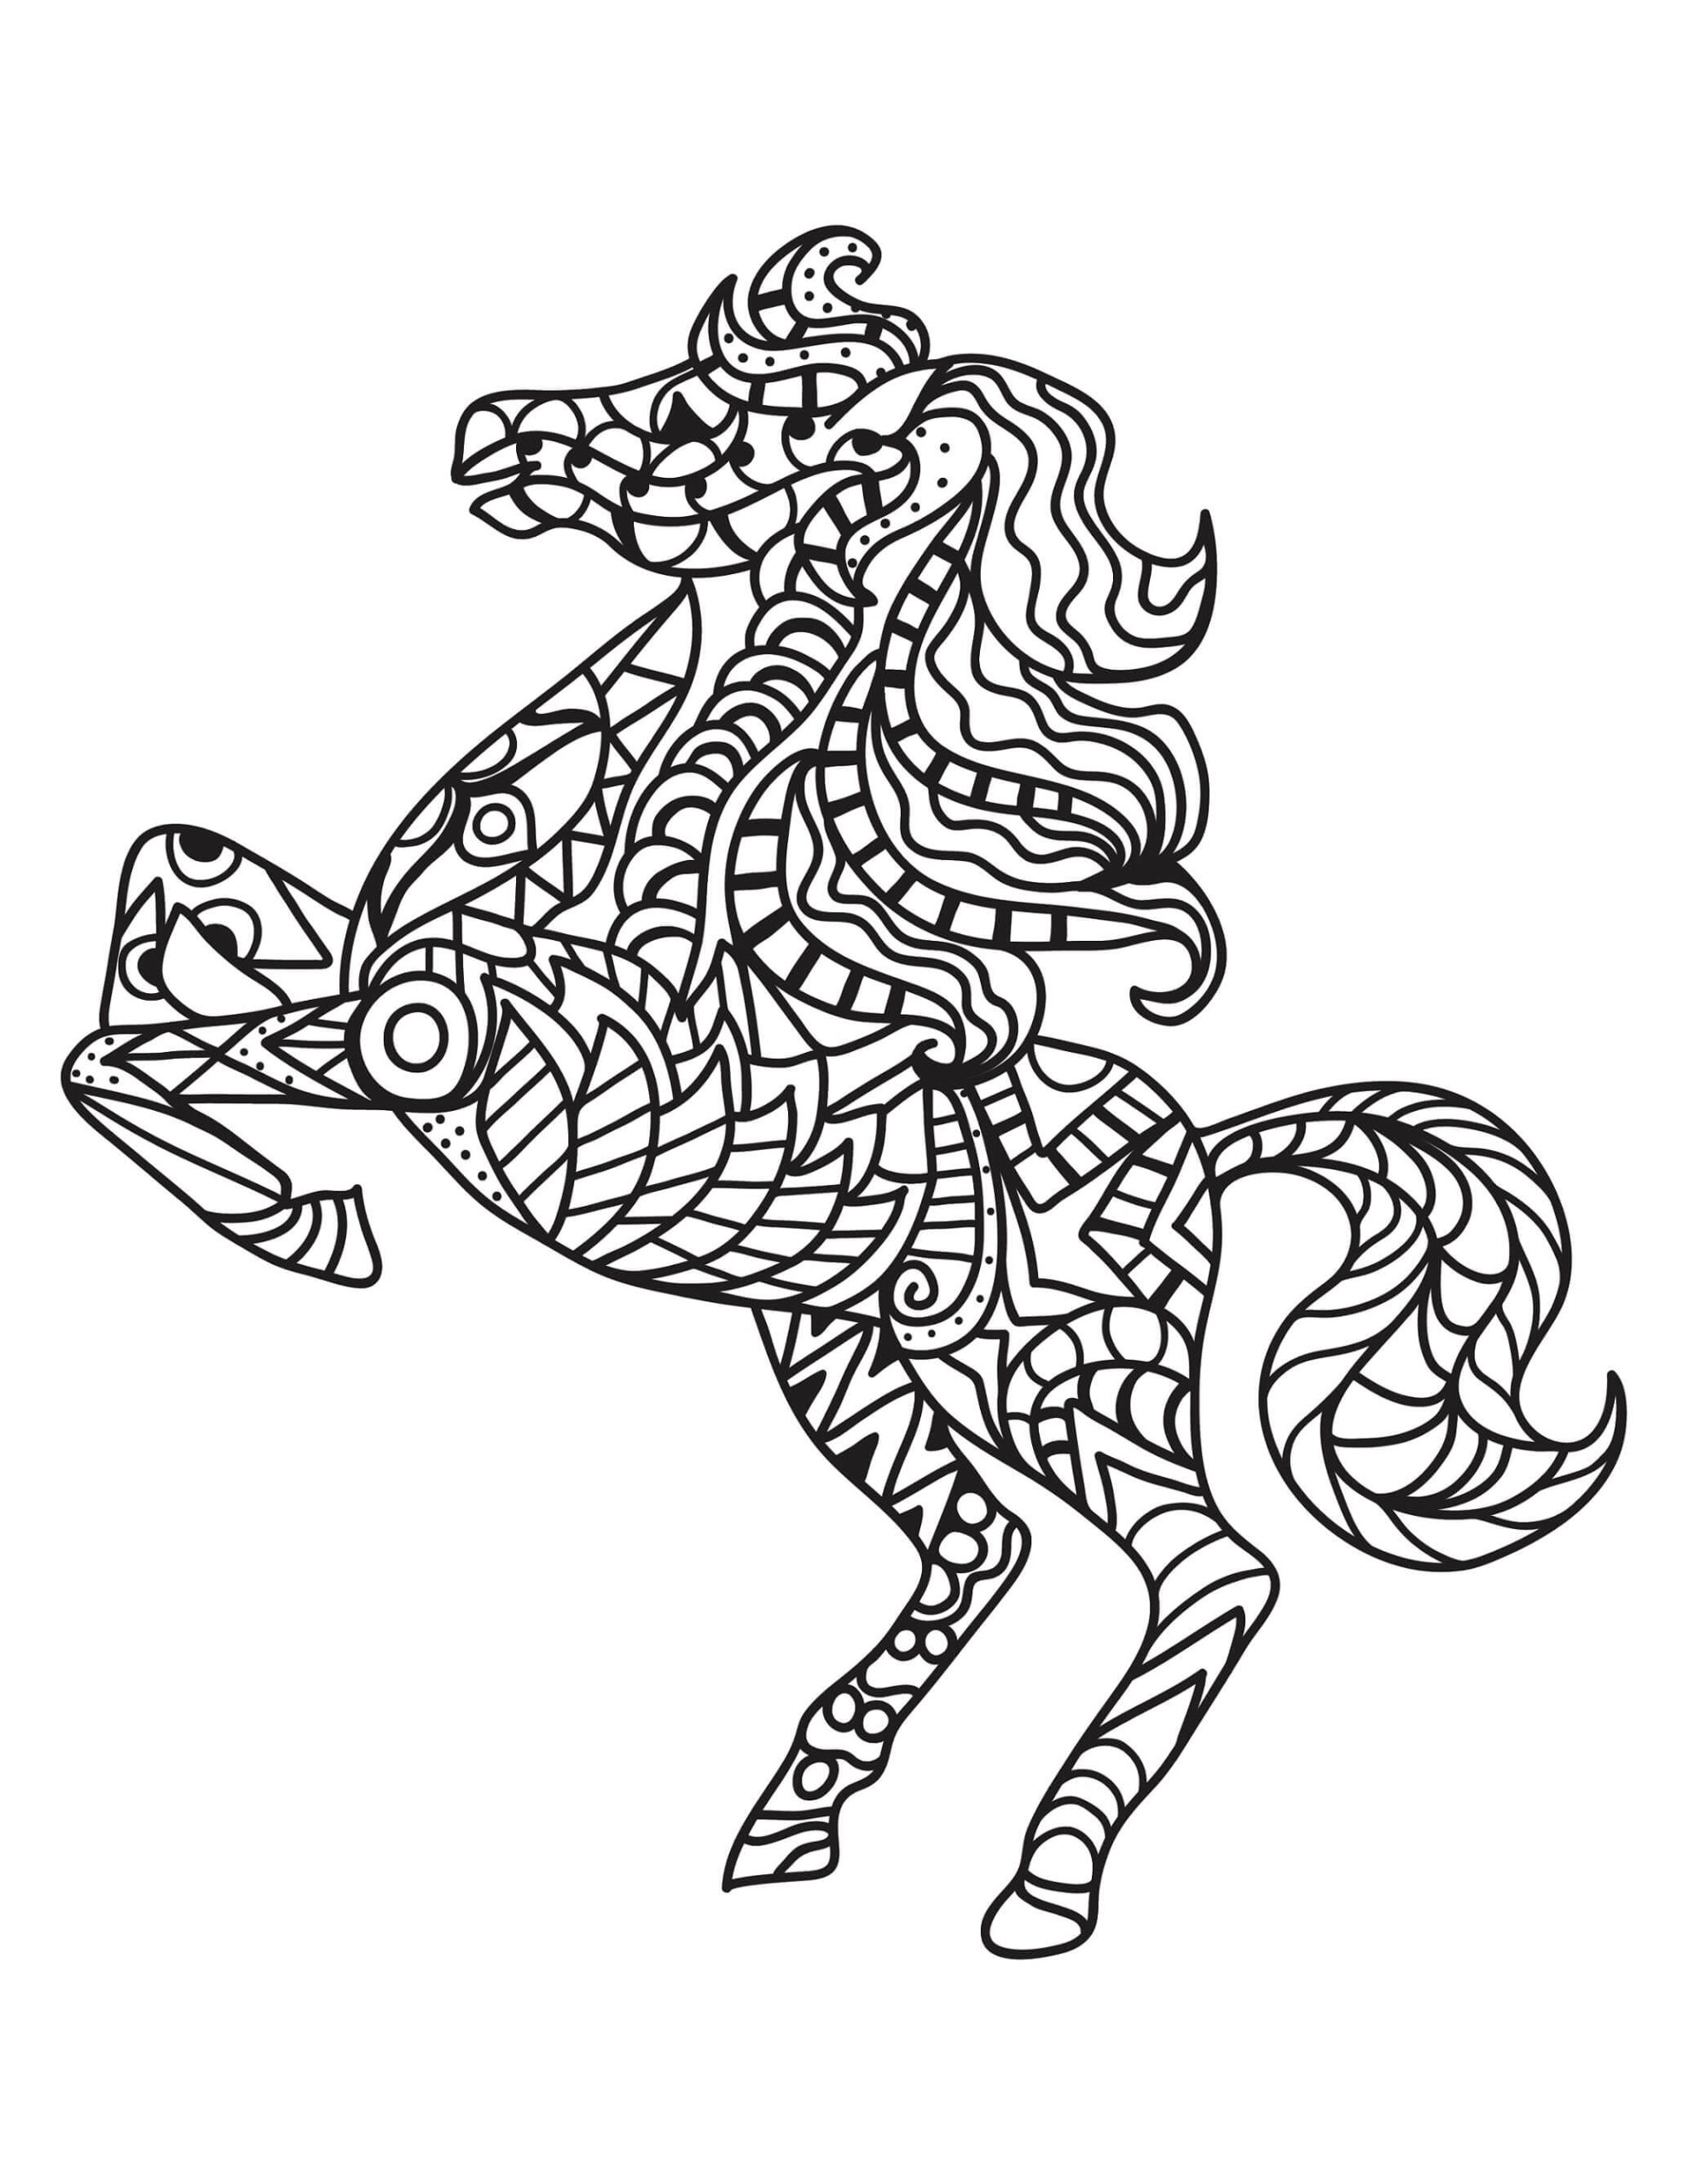 Mandala Horse Coloring Page - Sheet 6 Mandalas